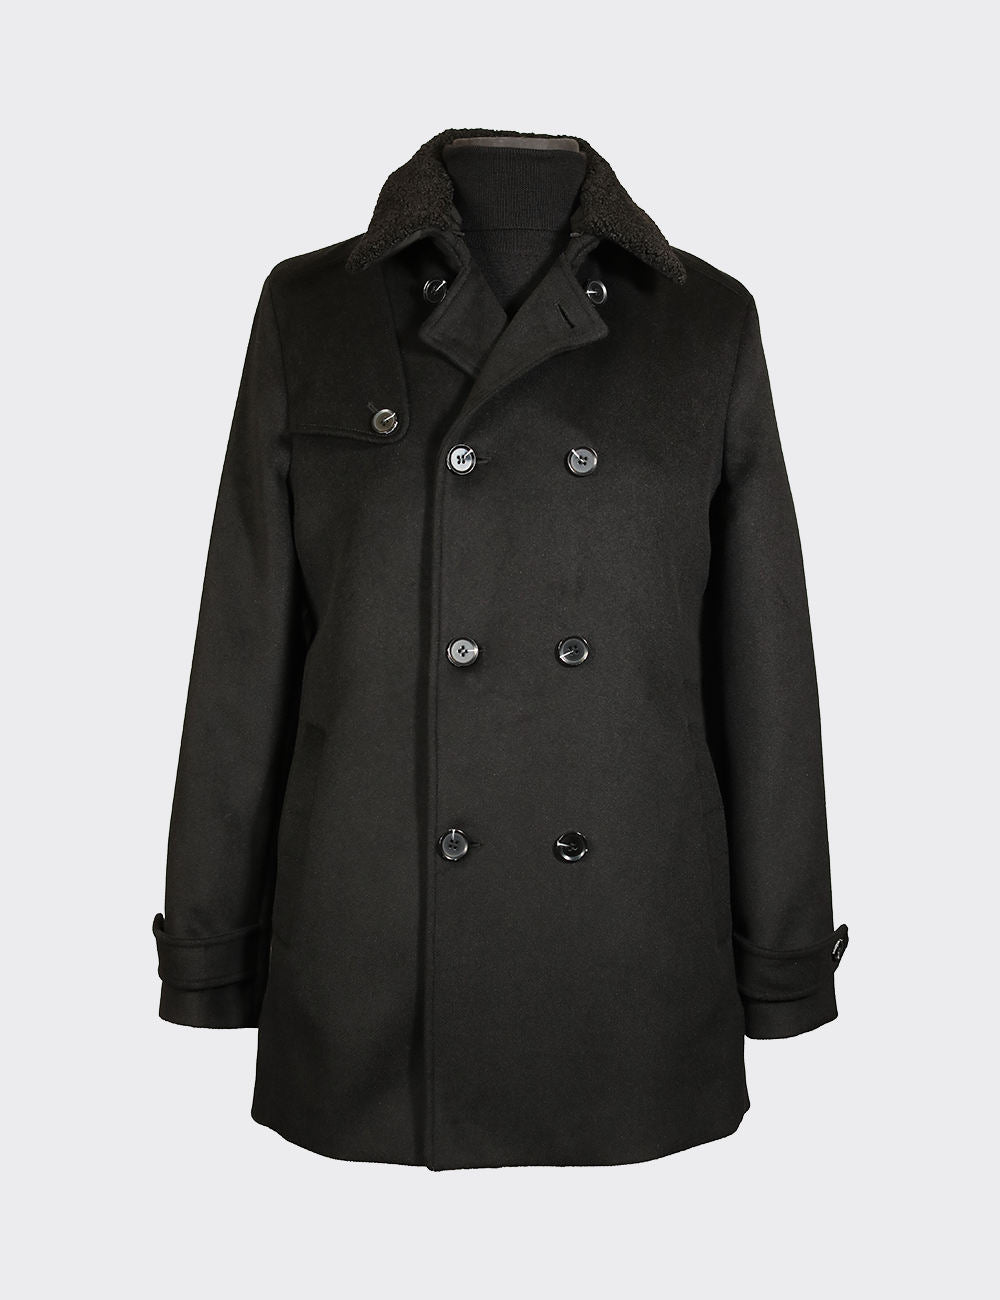 Milestone Double Breasted Black Formal Coat